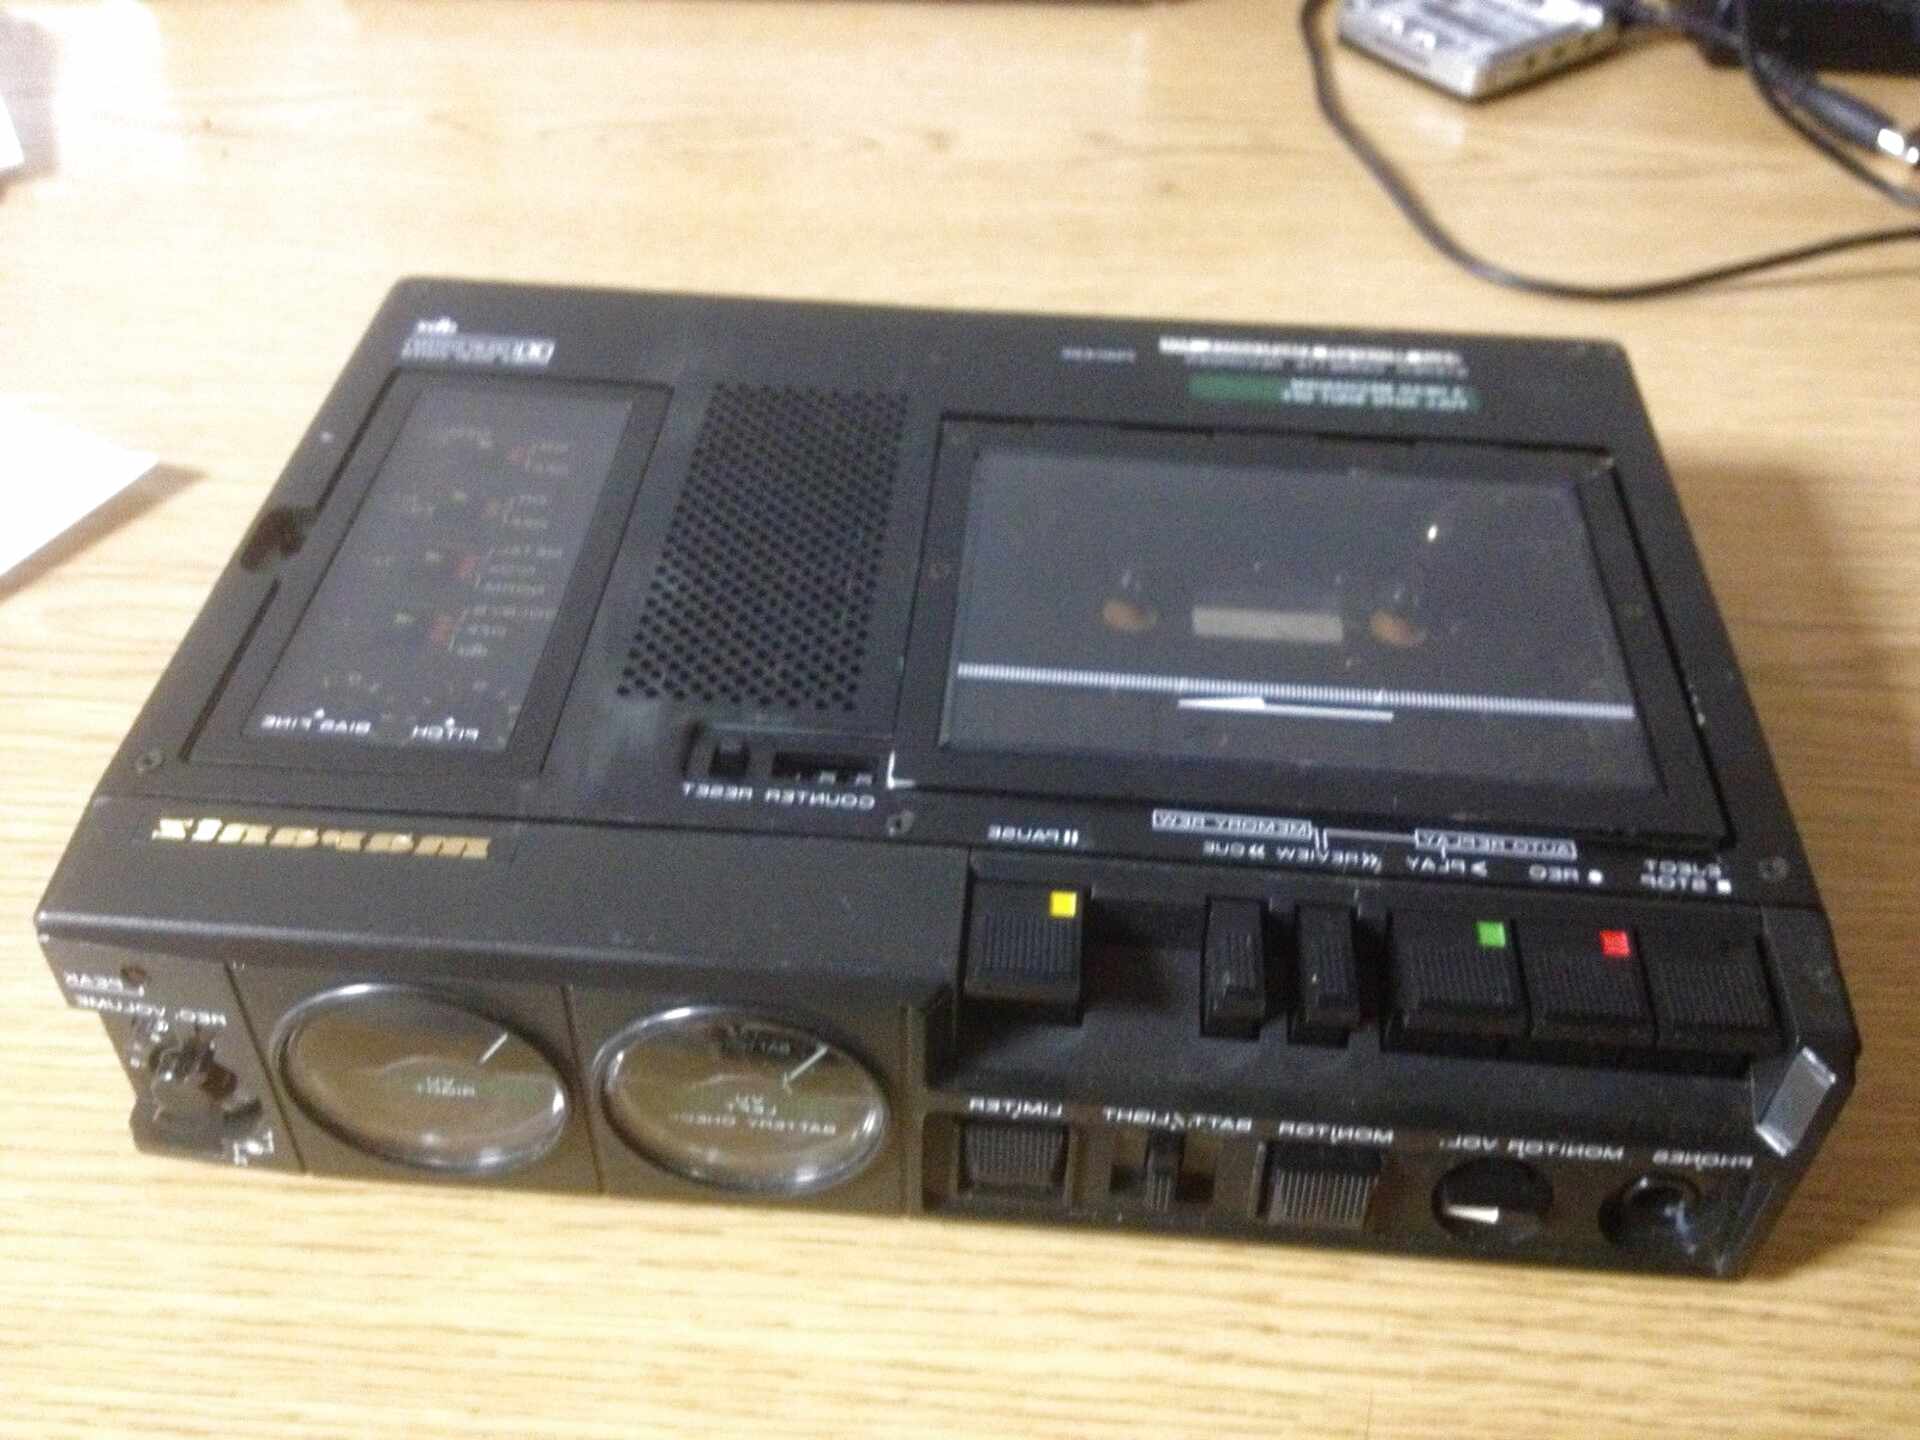 Portable Stereo Cassette Recorder For Sale In Uk